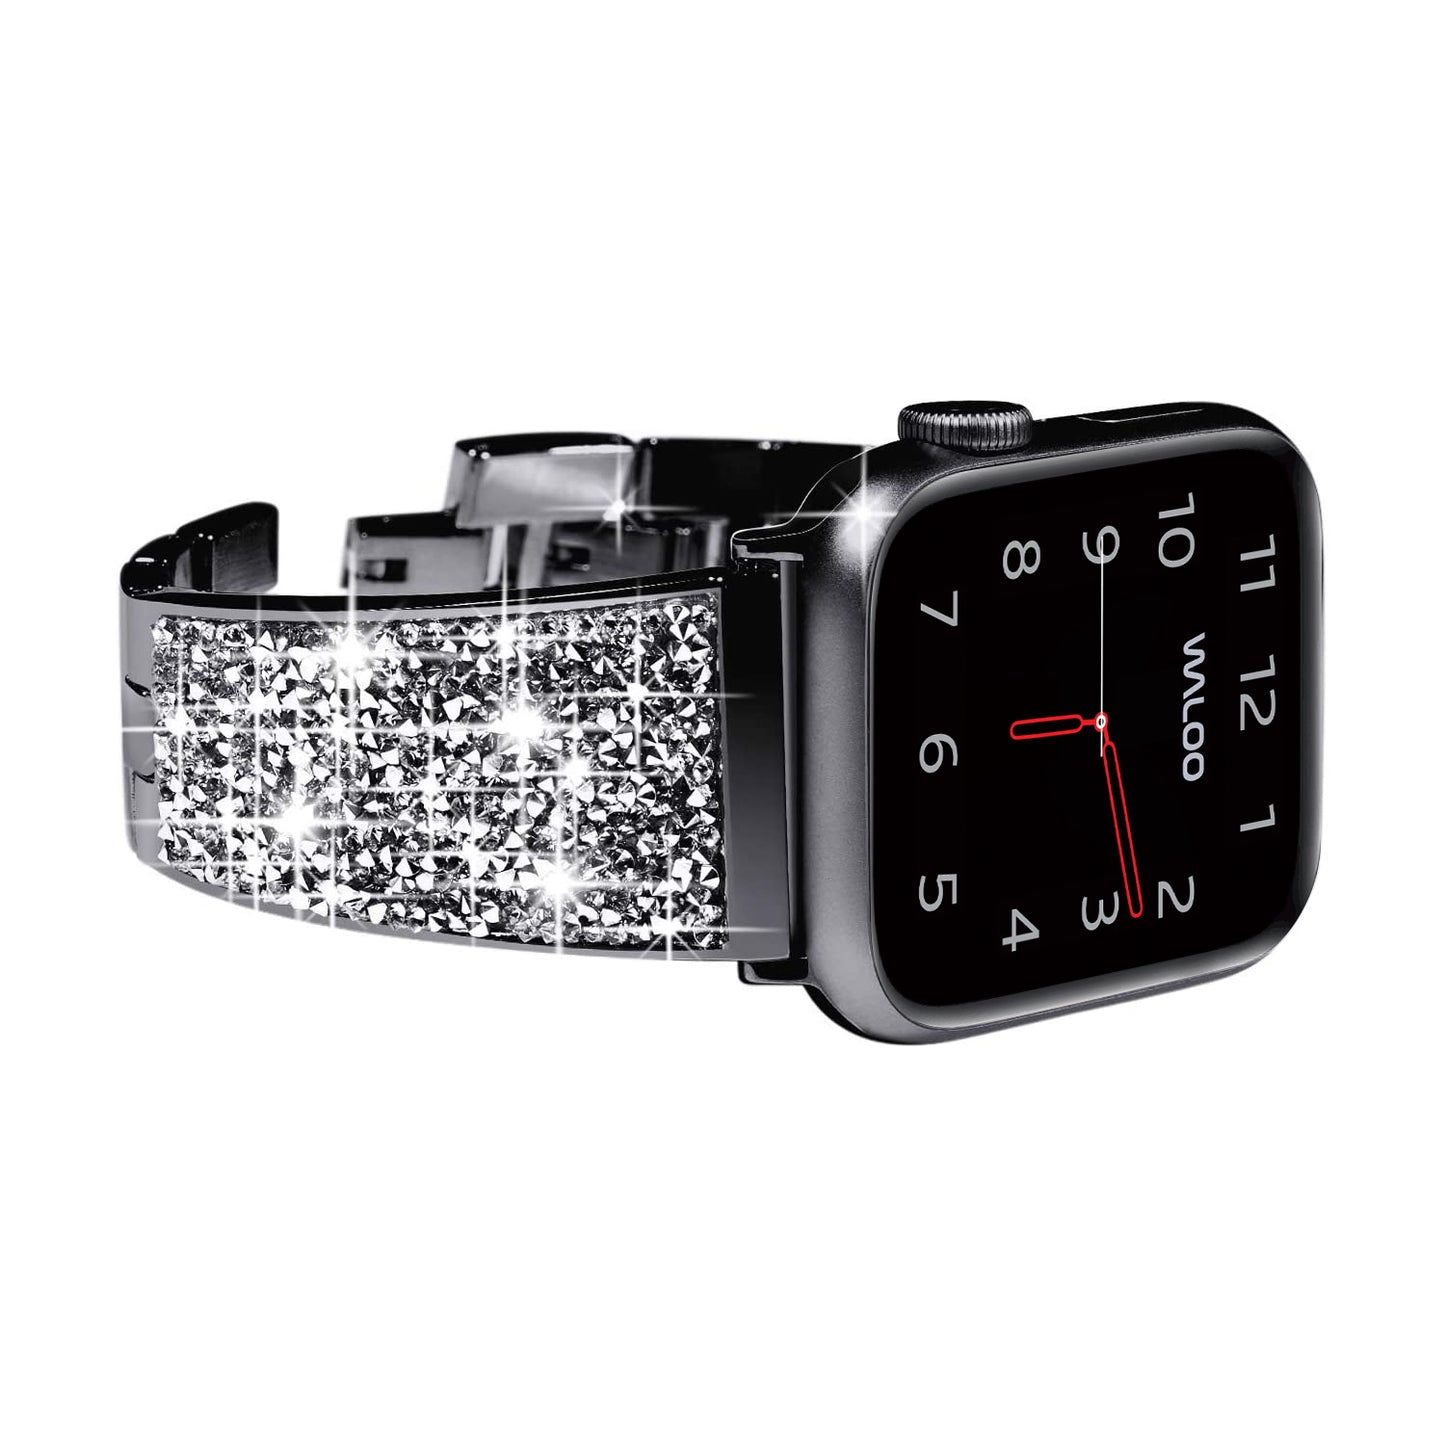 Waloo Diamond Studded Bracelet Band For Apple Watch